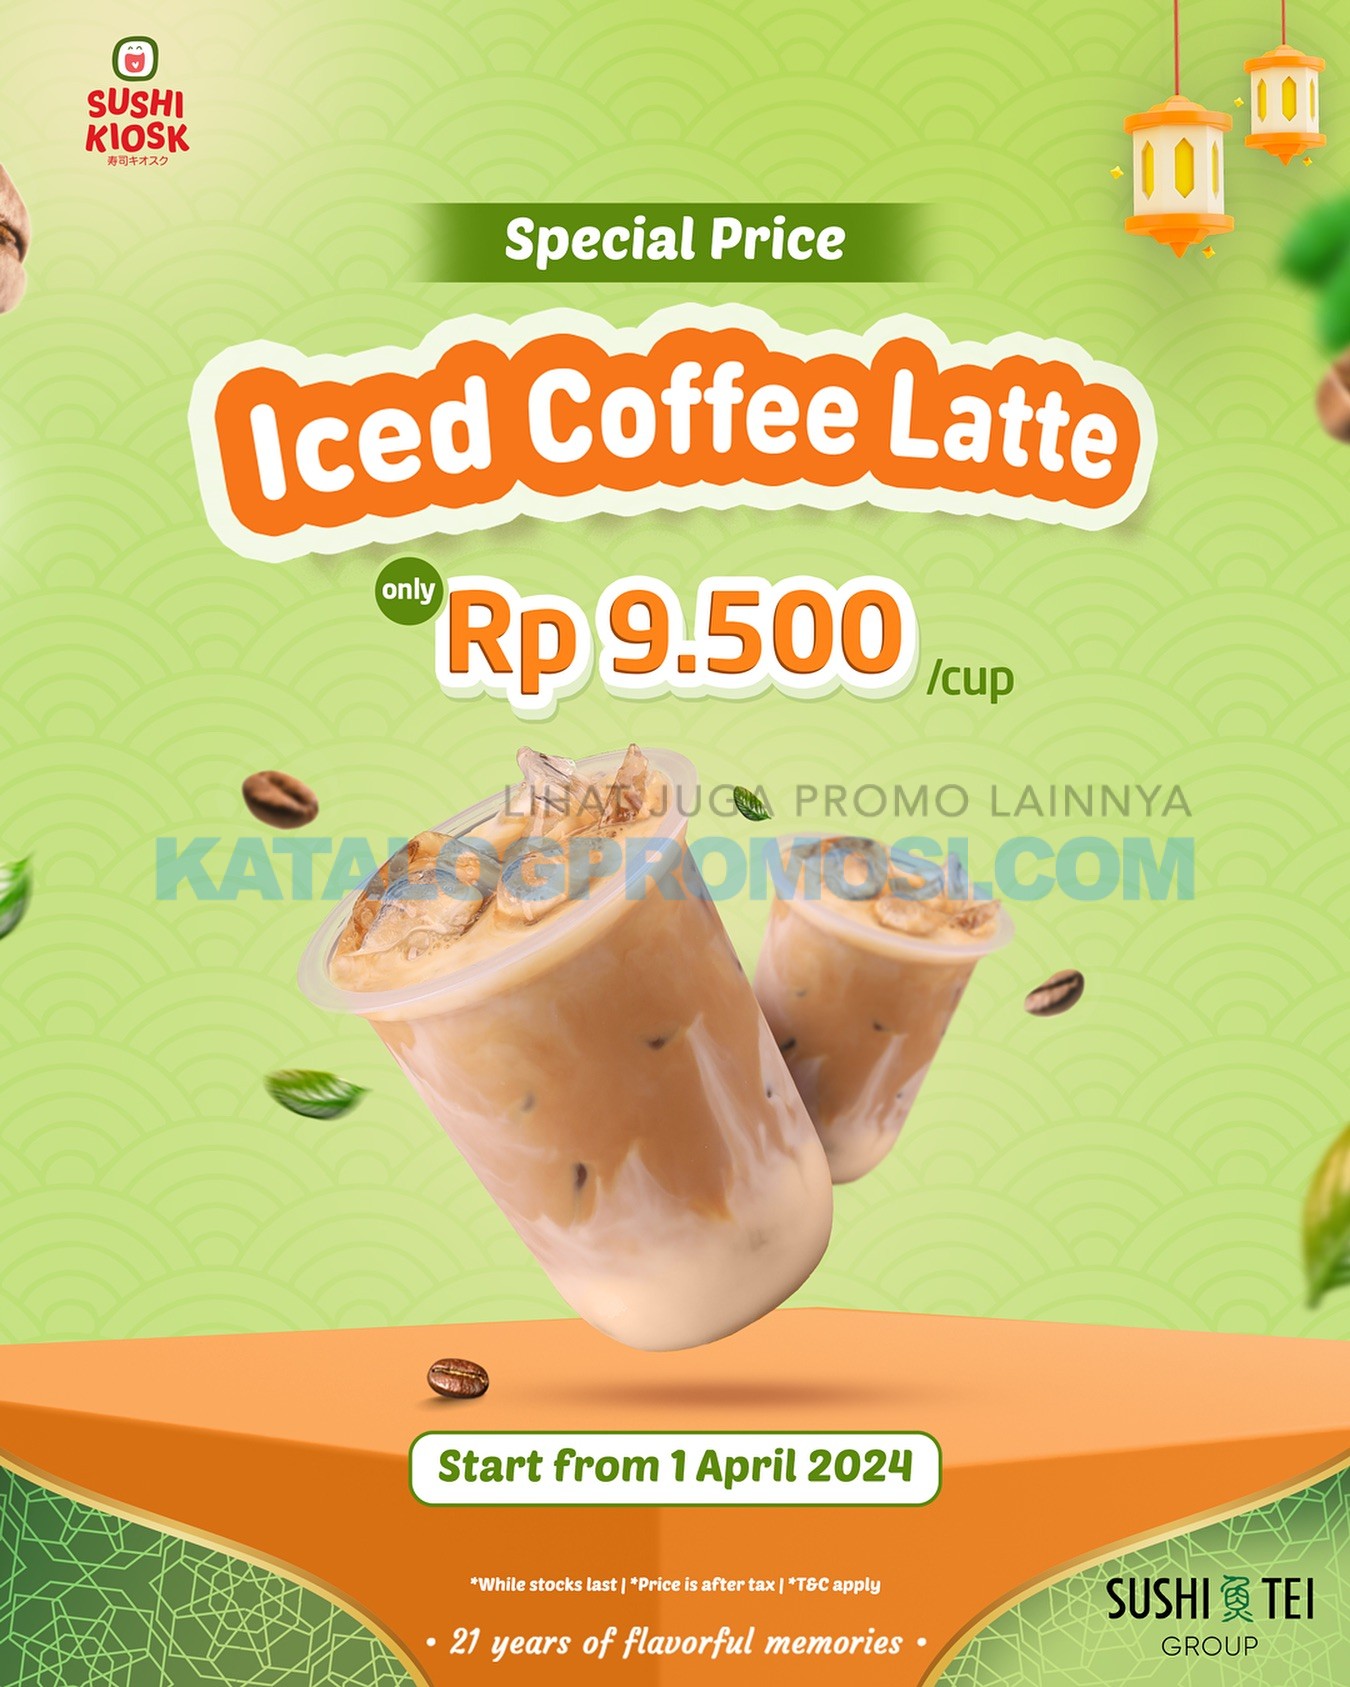 Promo Sushi Kiosk Special Price Iced Coffee Latte